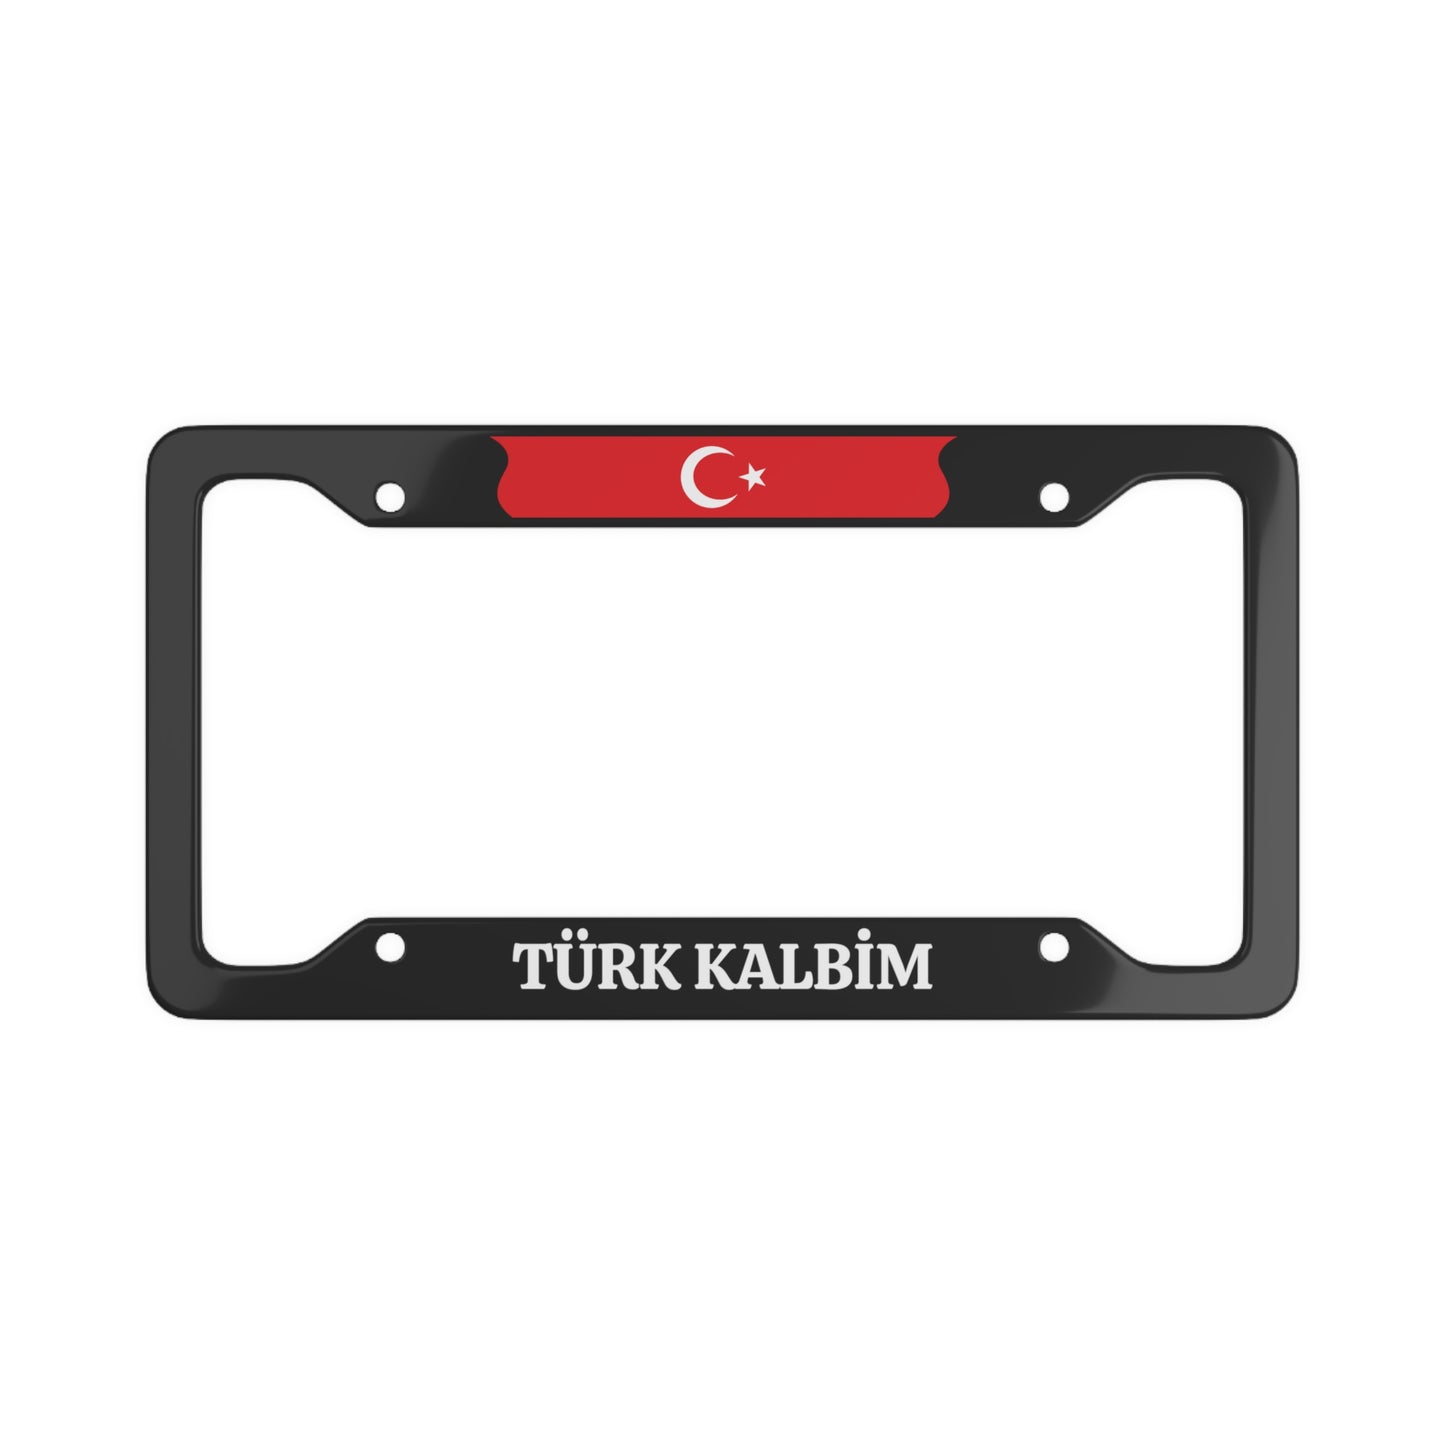 TÜRK KALBİM  License Plate Frame